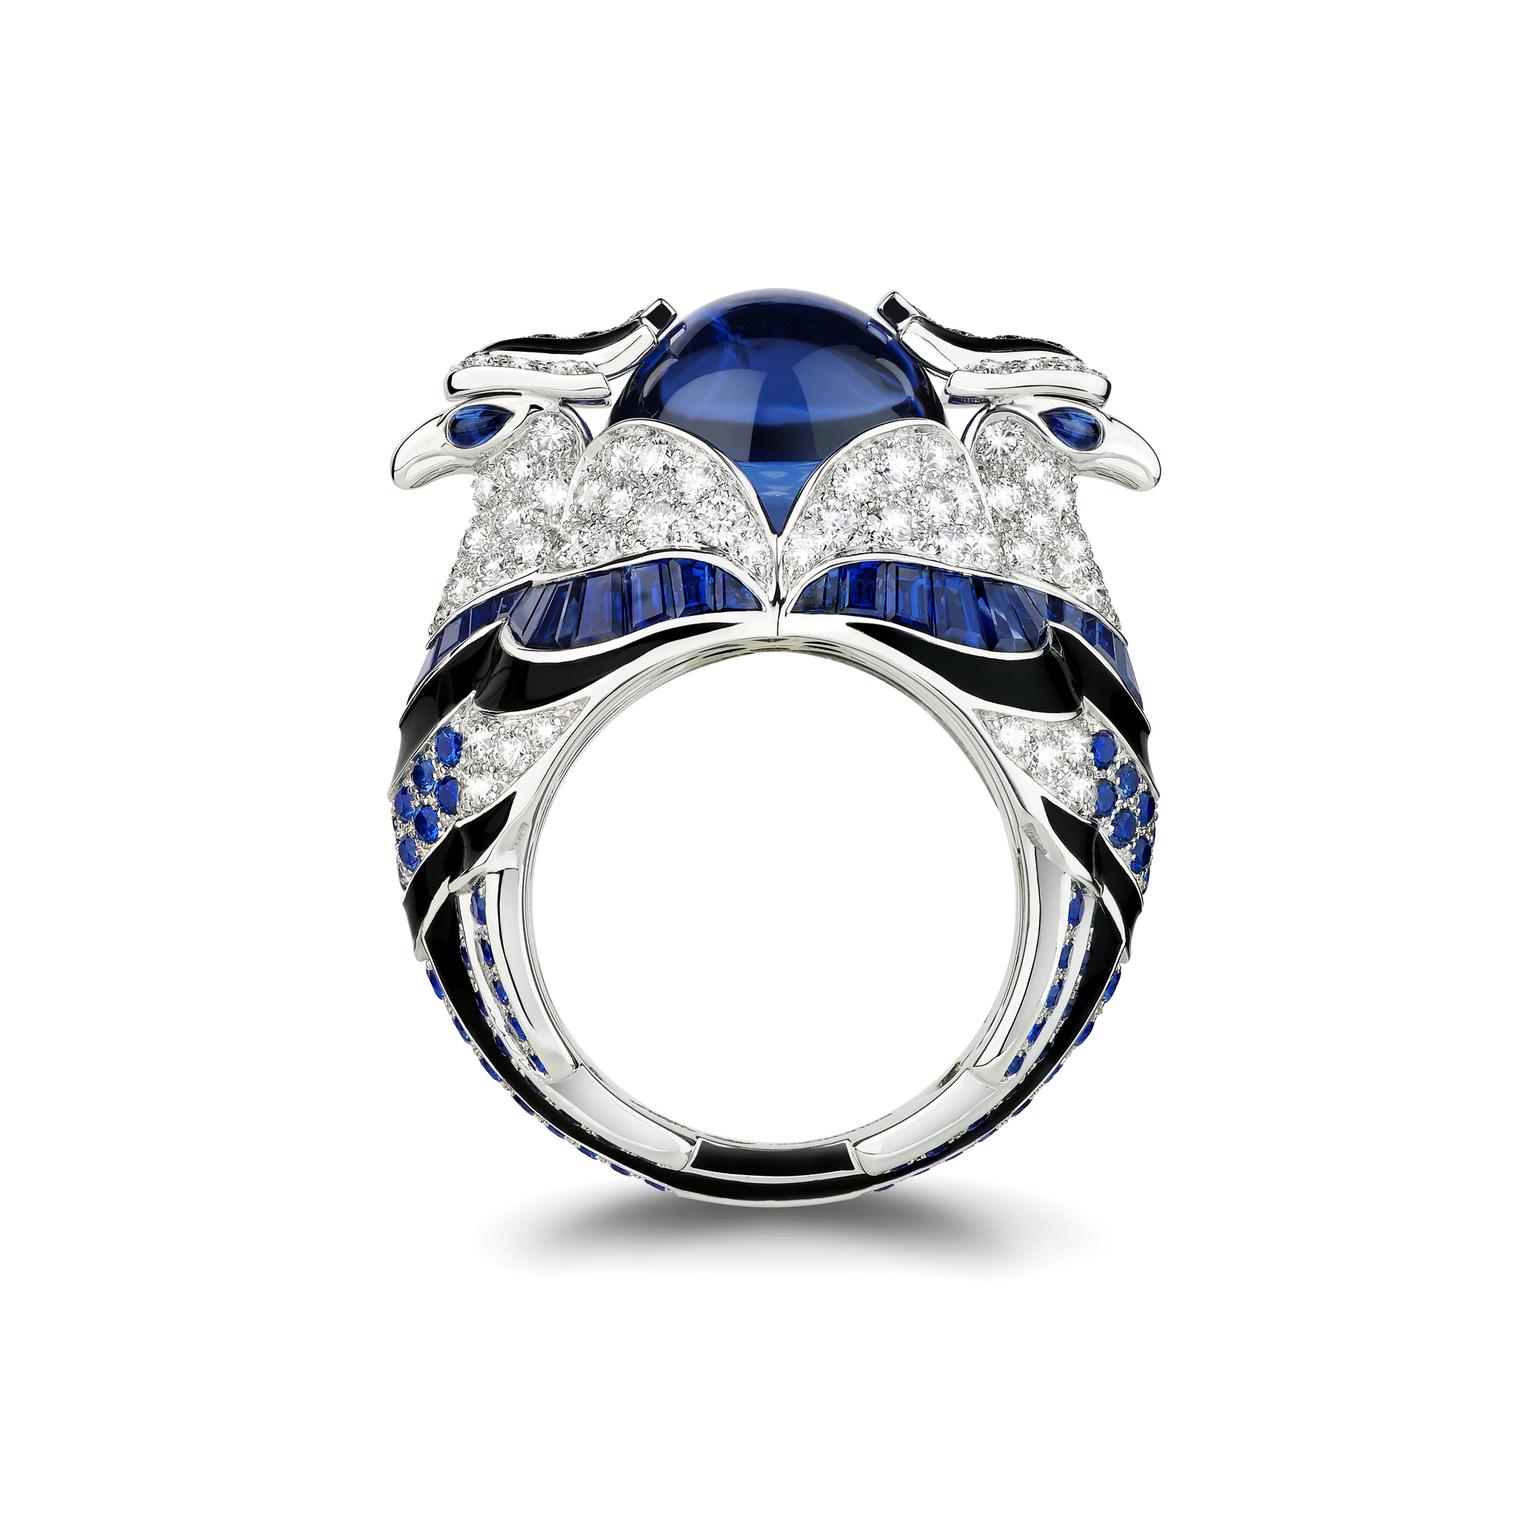 Boucheron eagle-inspired Chinha blue ring